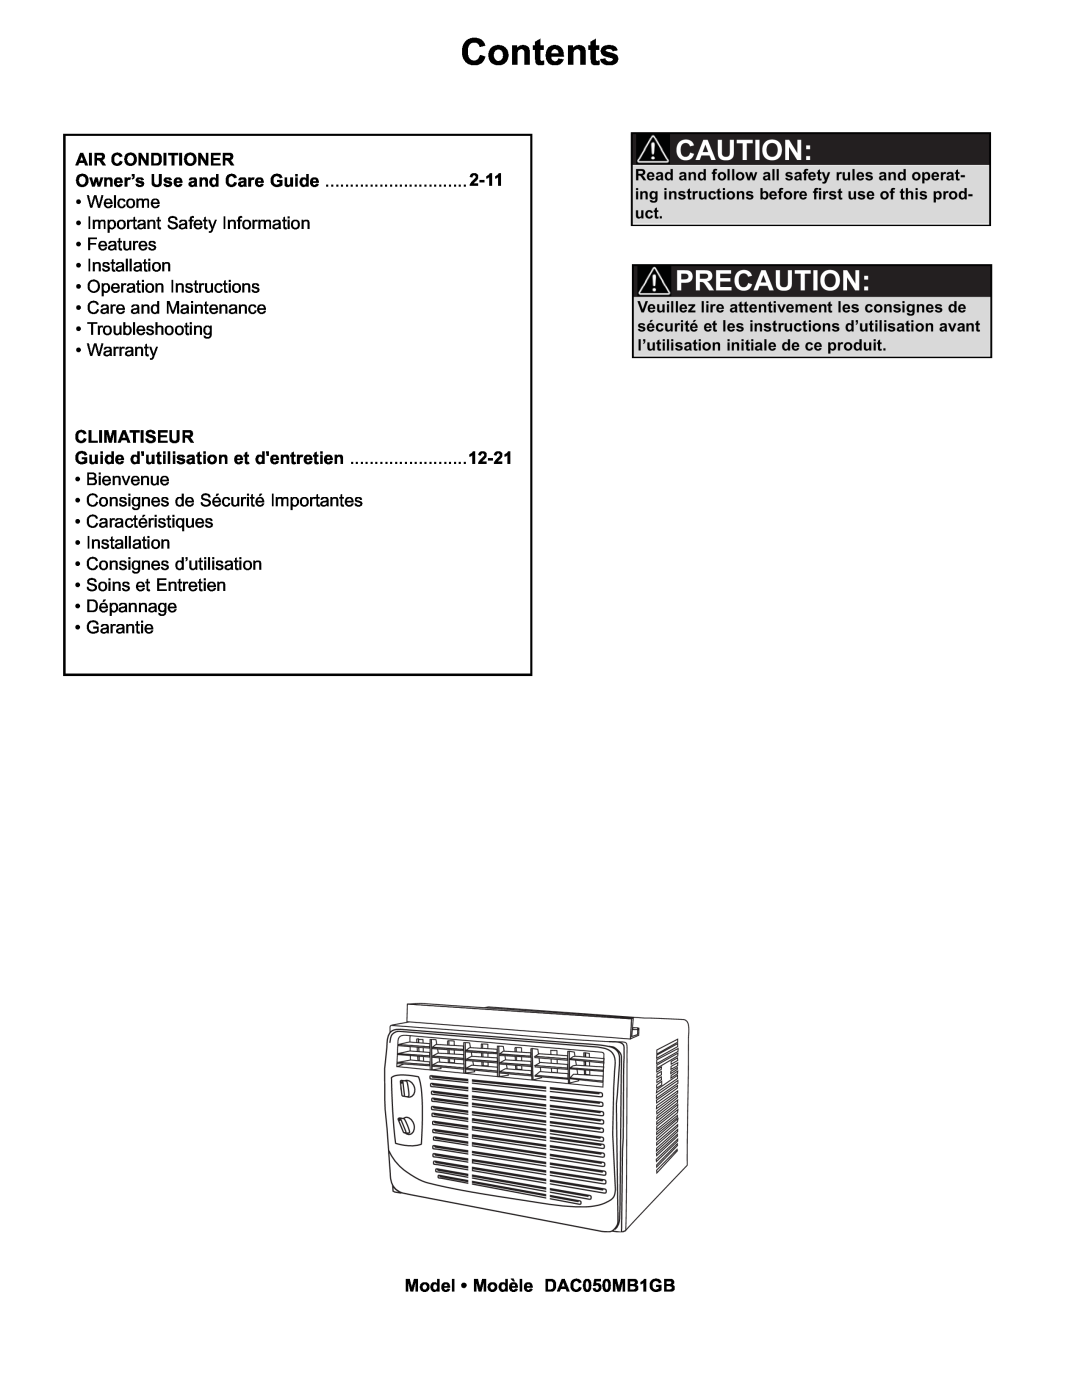 Danby manual Contents, Precaution, Air Conditioner, 2-11, Climatiseur, 12-21, Model Modèle DAC050MB1GB 